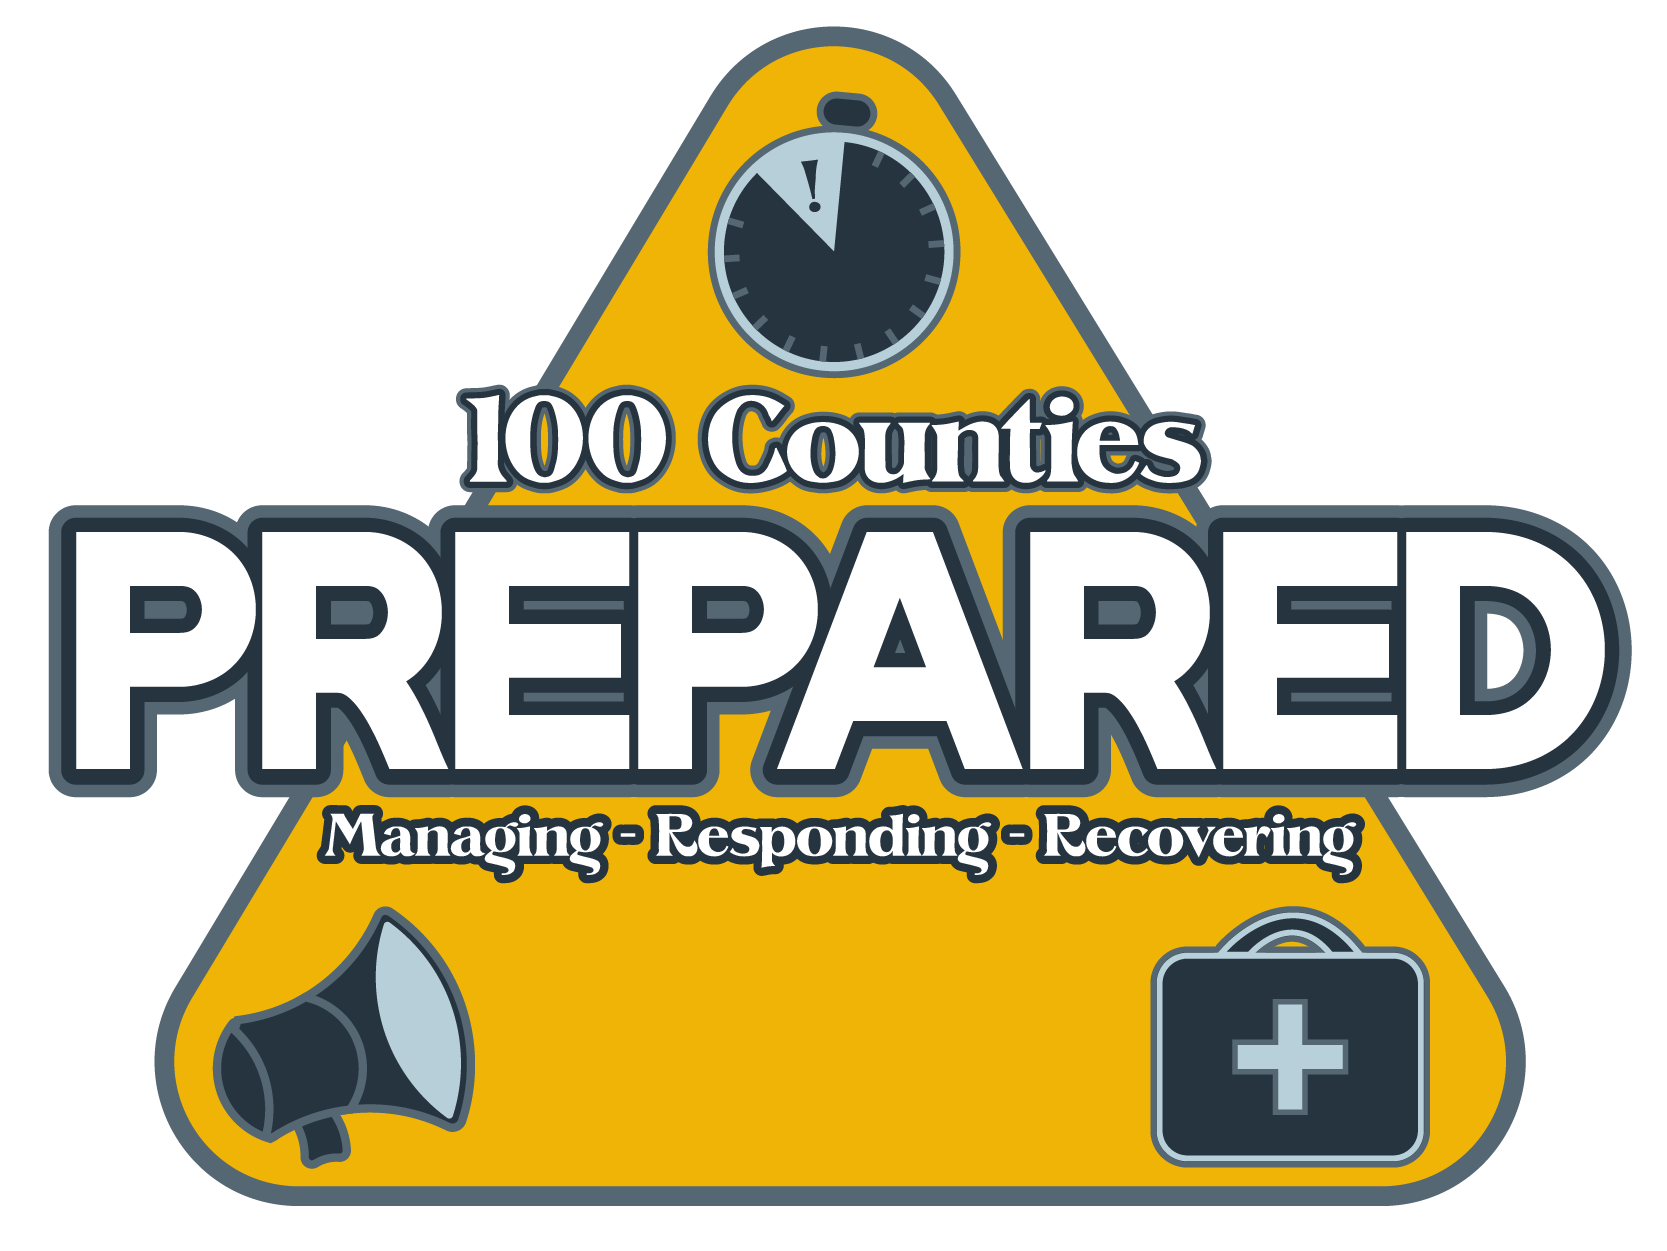 100 Counties Prepared initiative logo